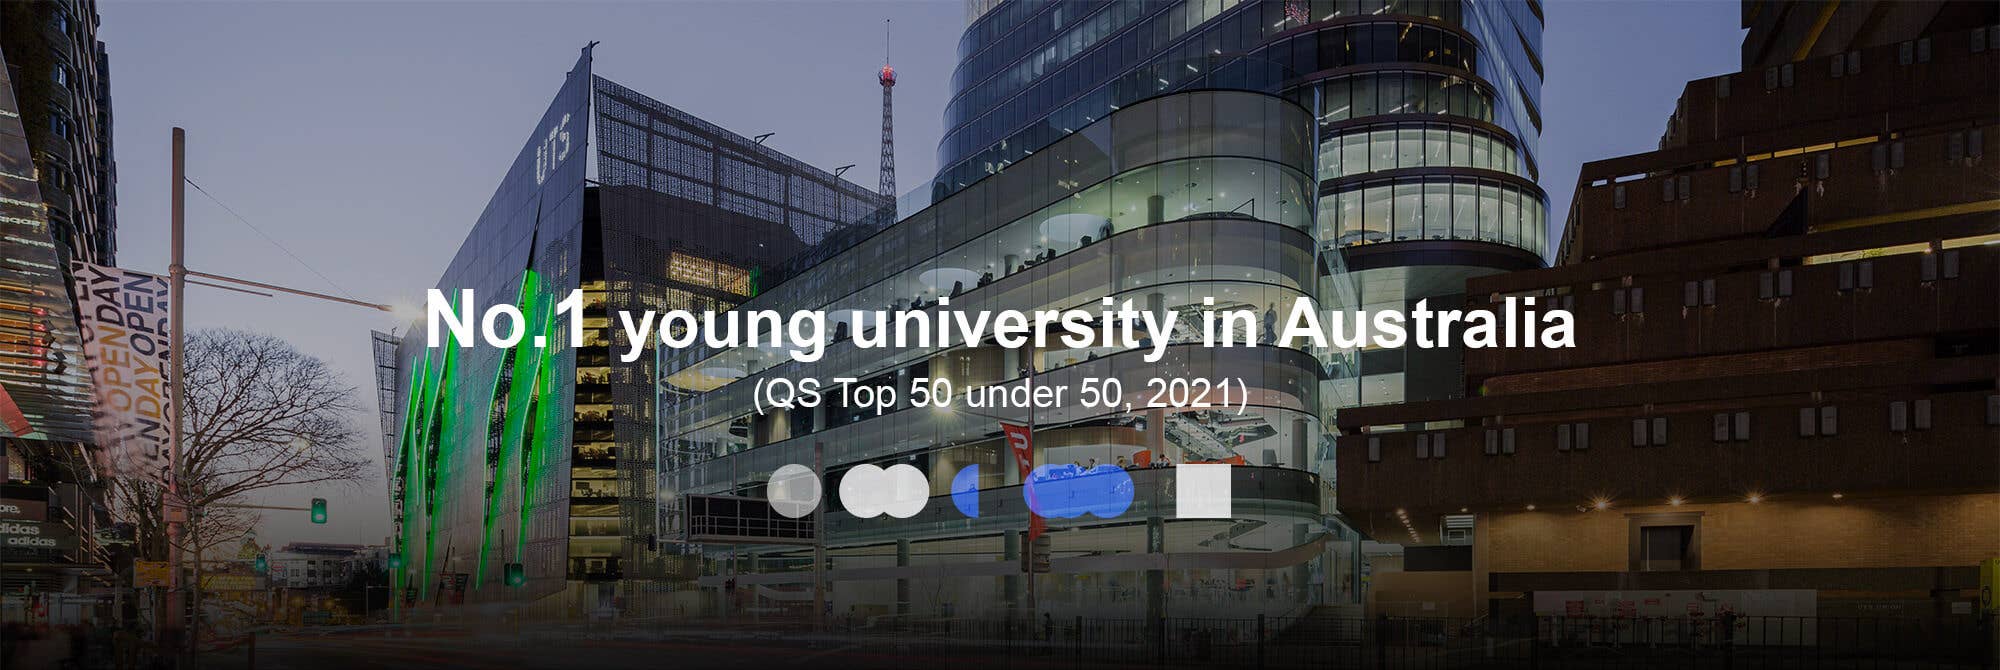 No. 1 Young university in Australia